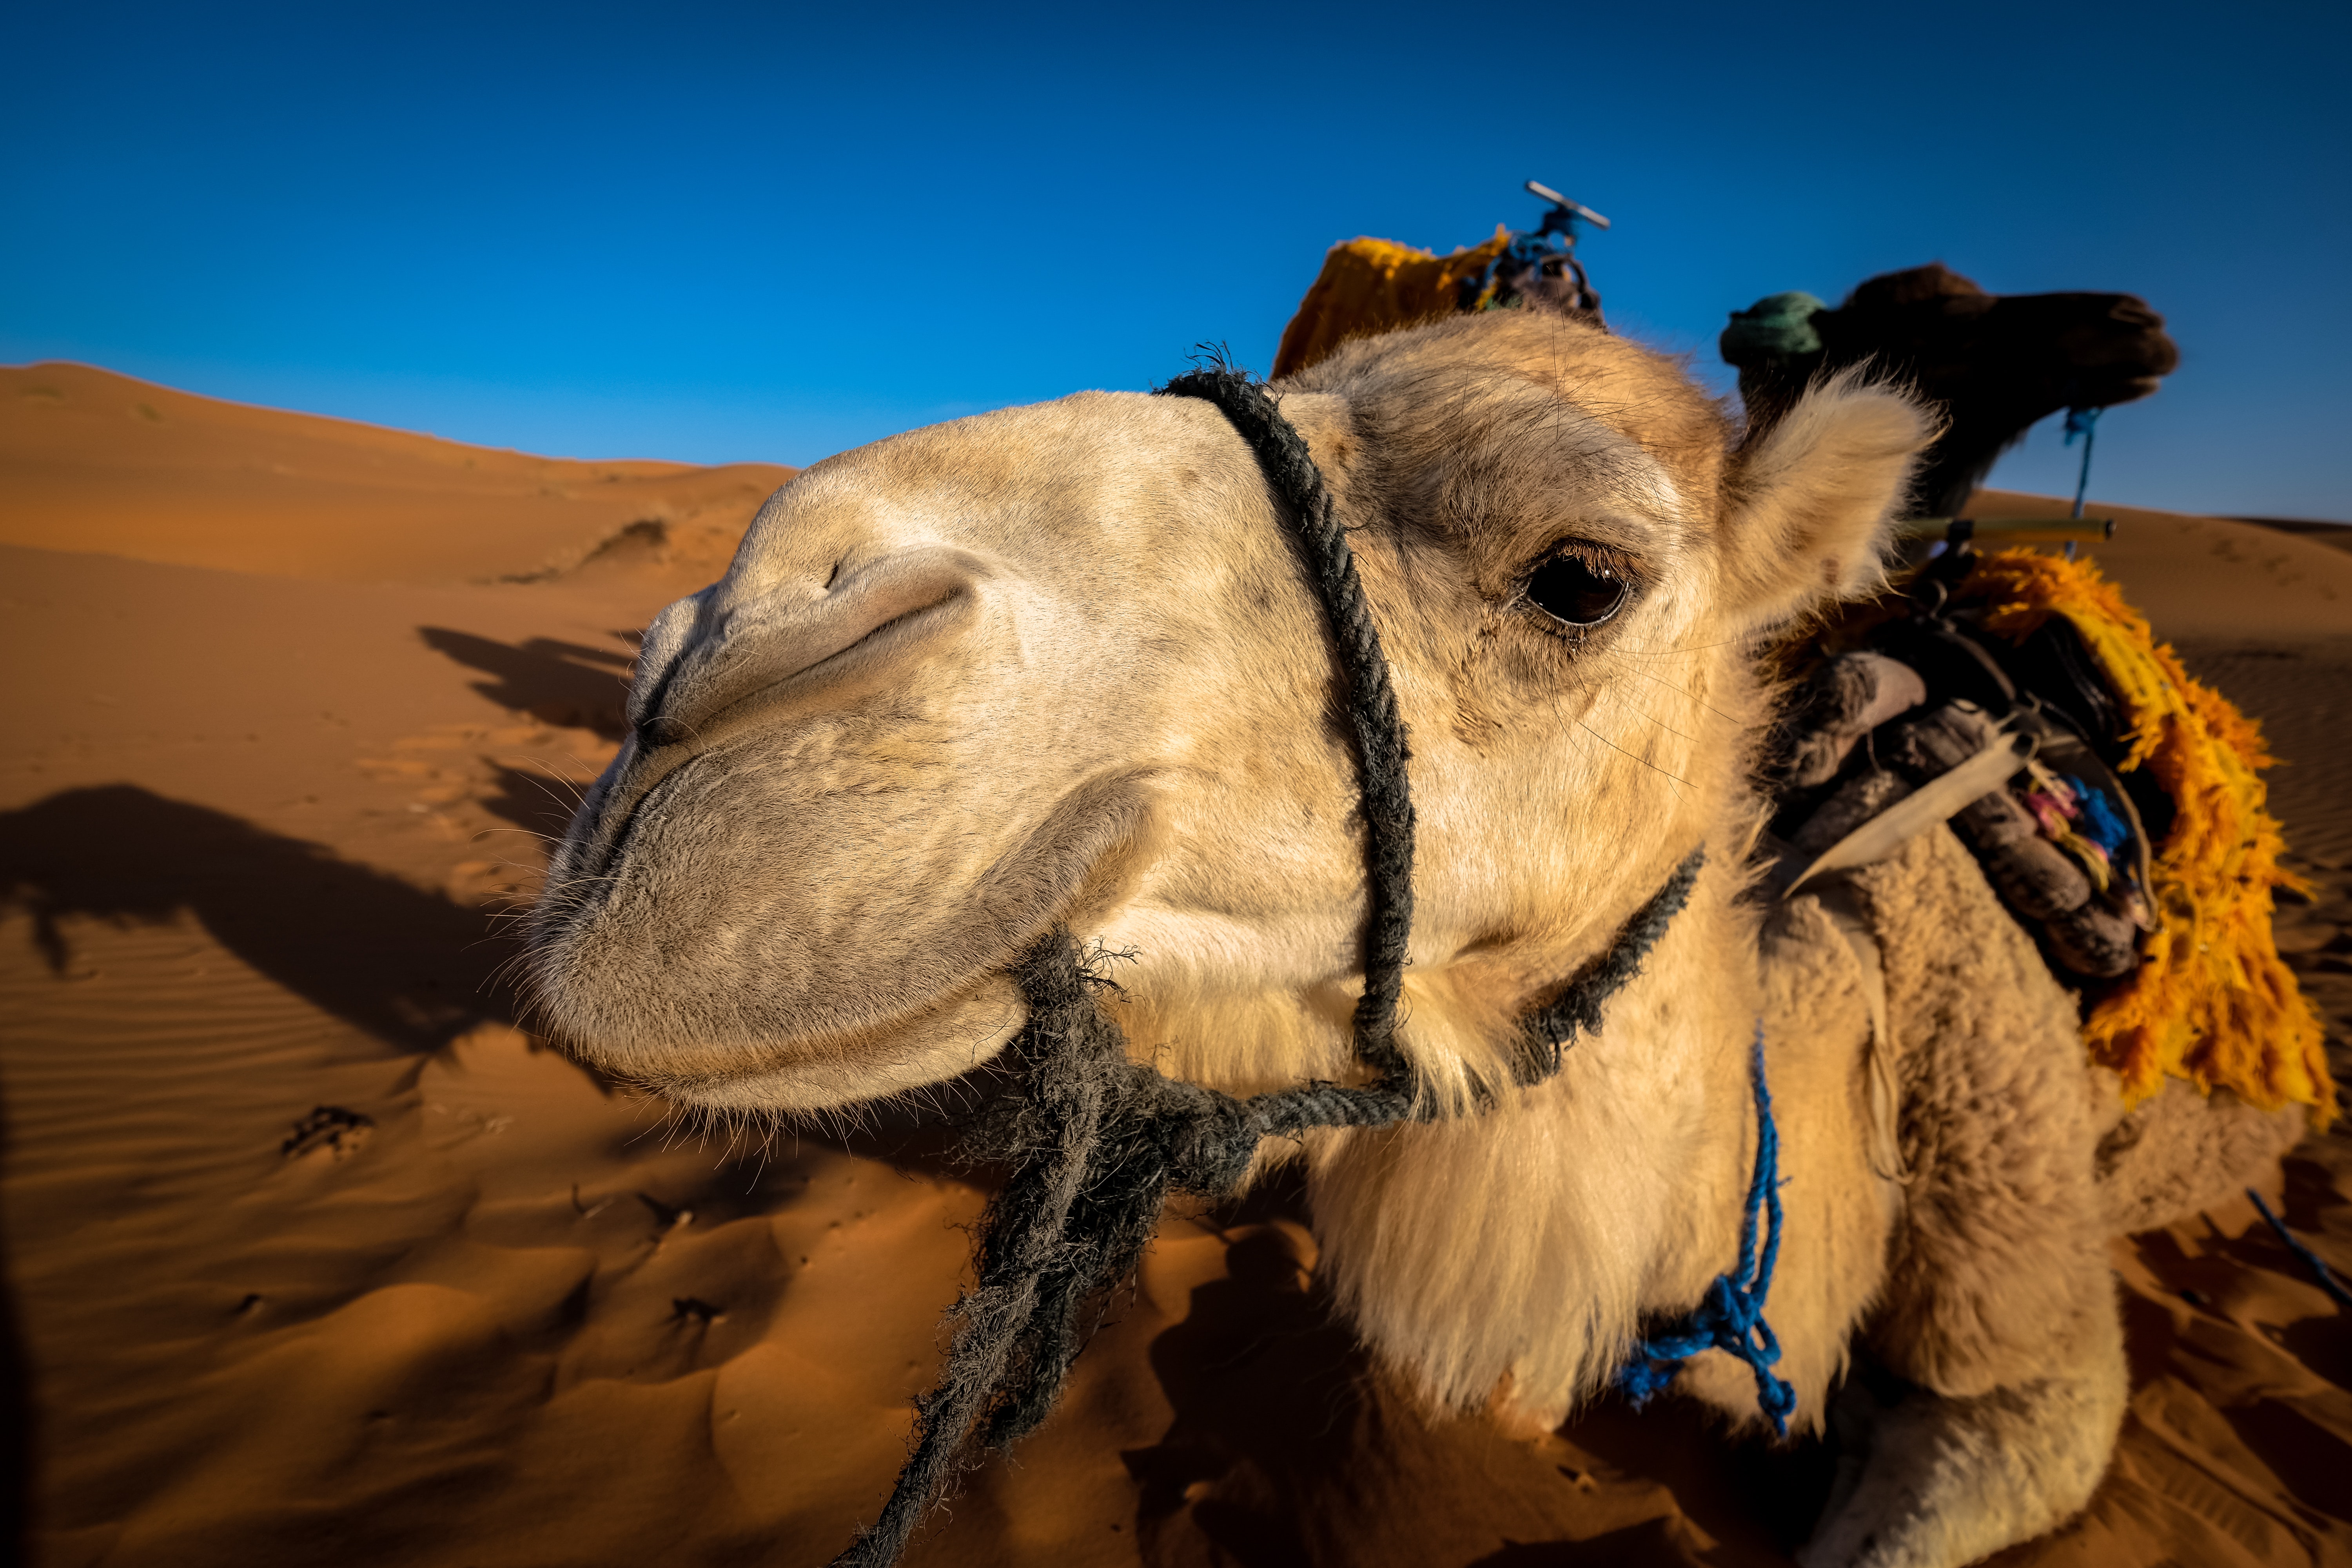 37 Humpy Camel Images · Pexels · Free Stock Photos